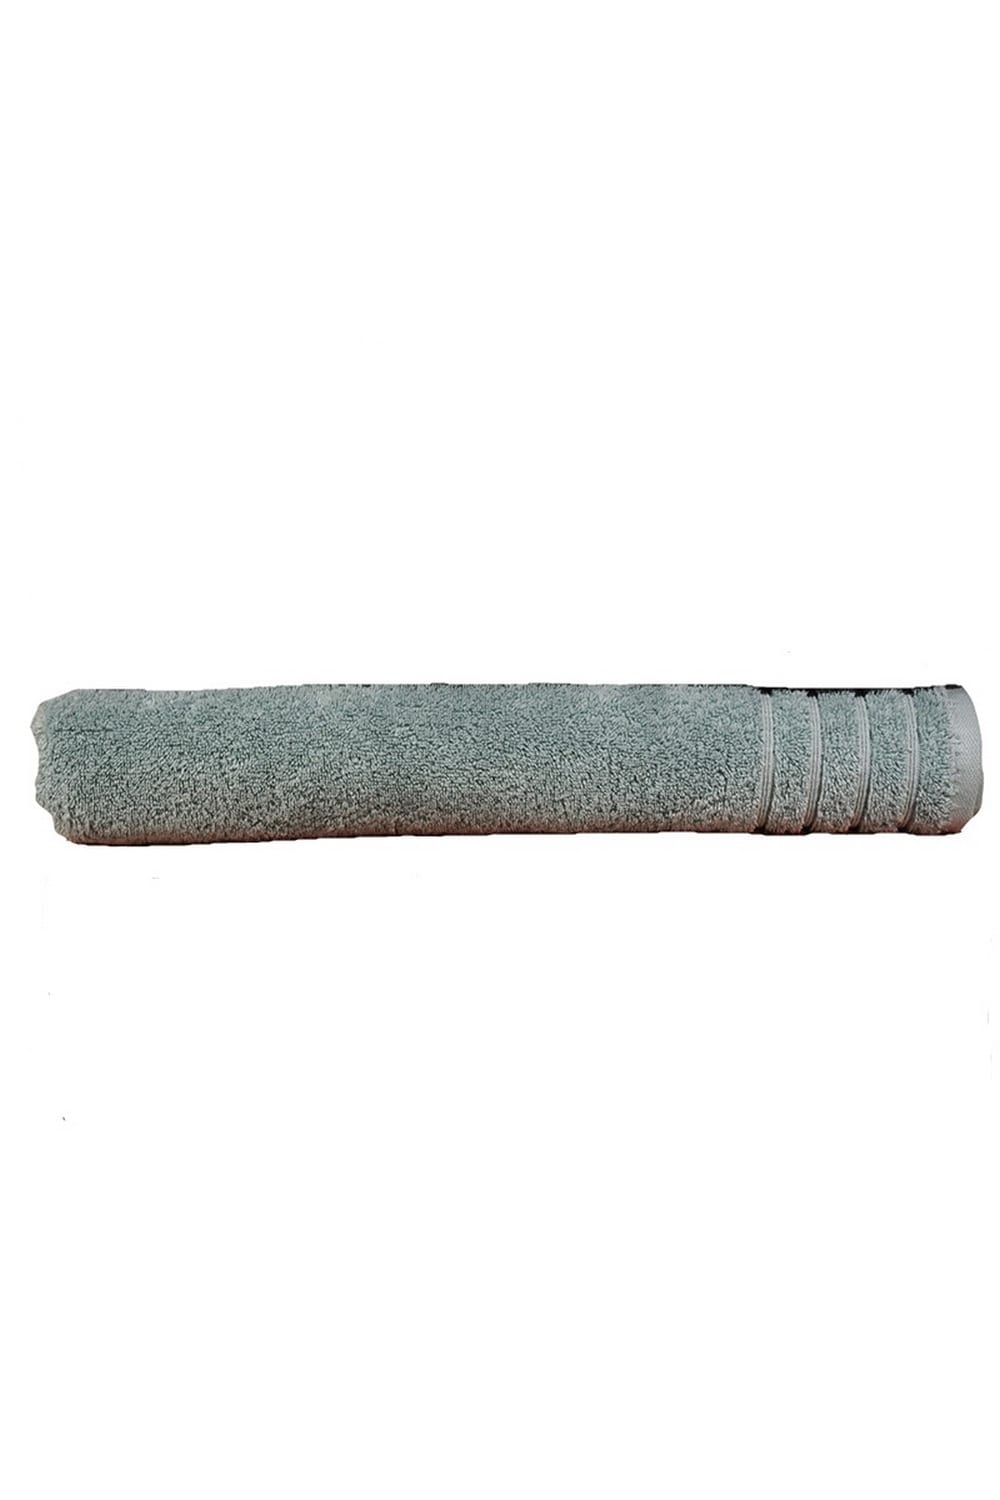 A&R Towels Organic Bath Towel (Green) (One Size)